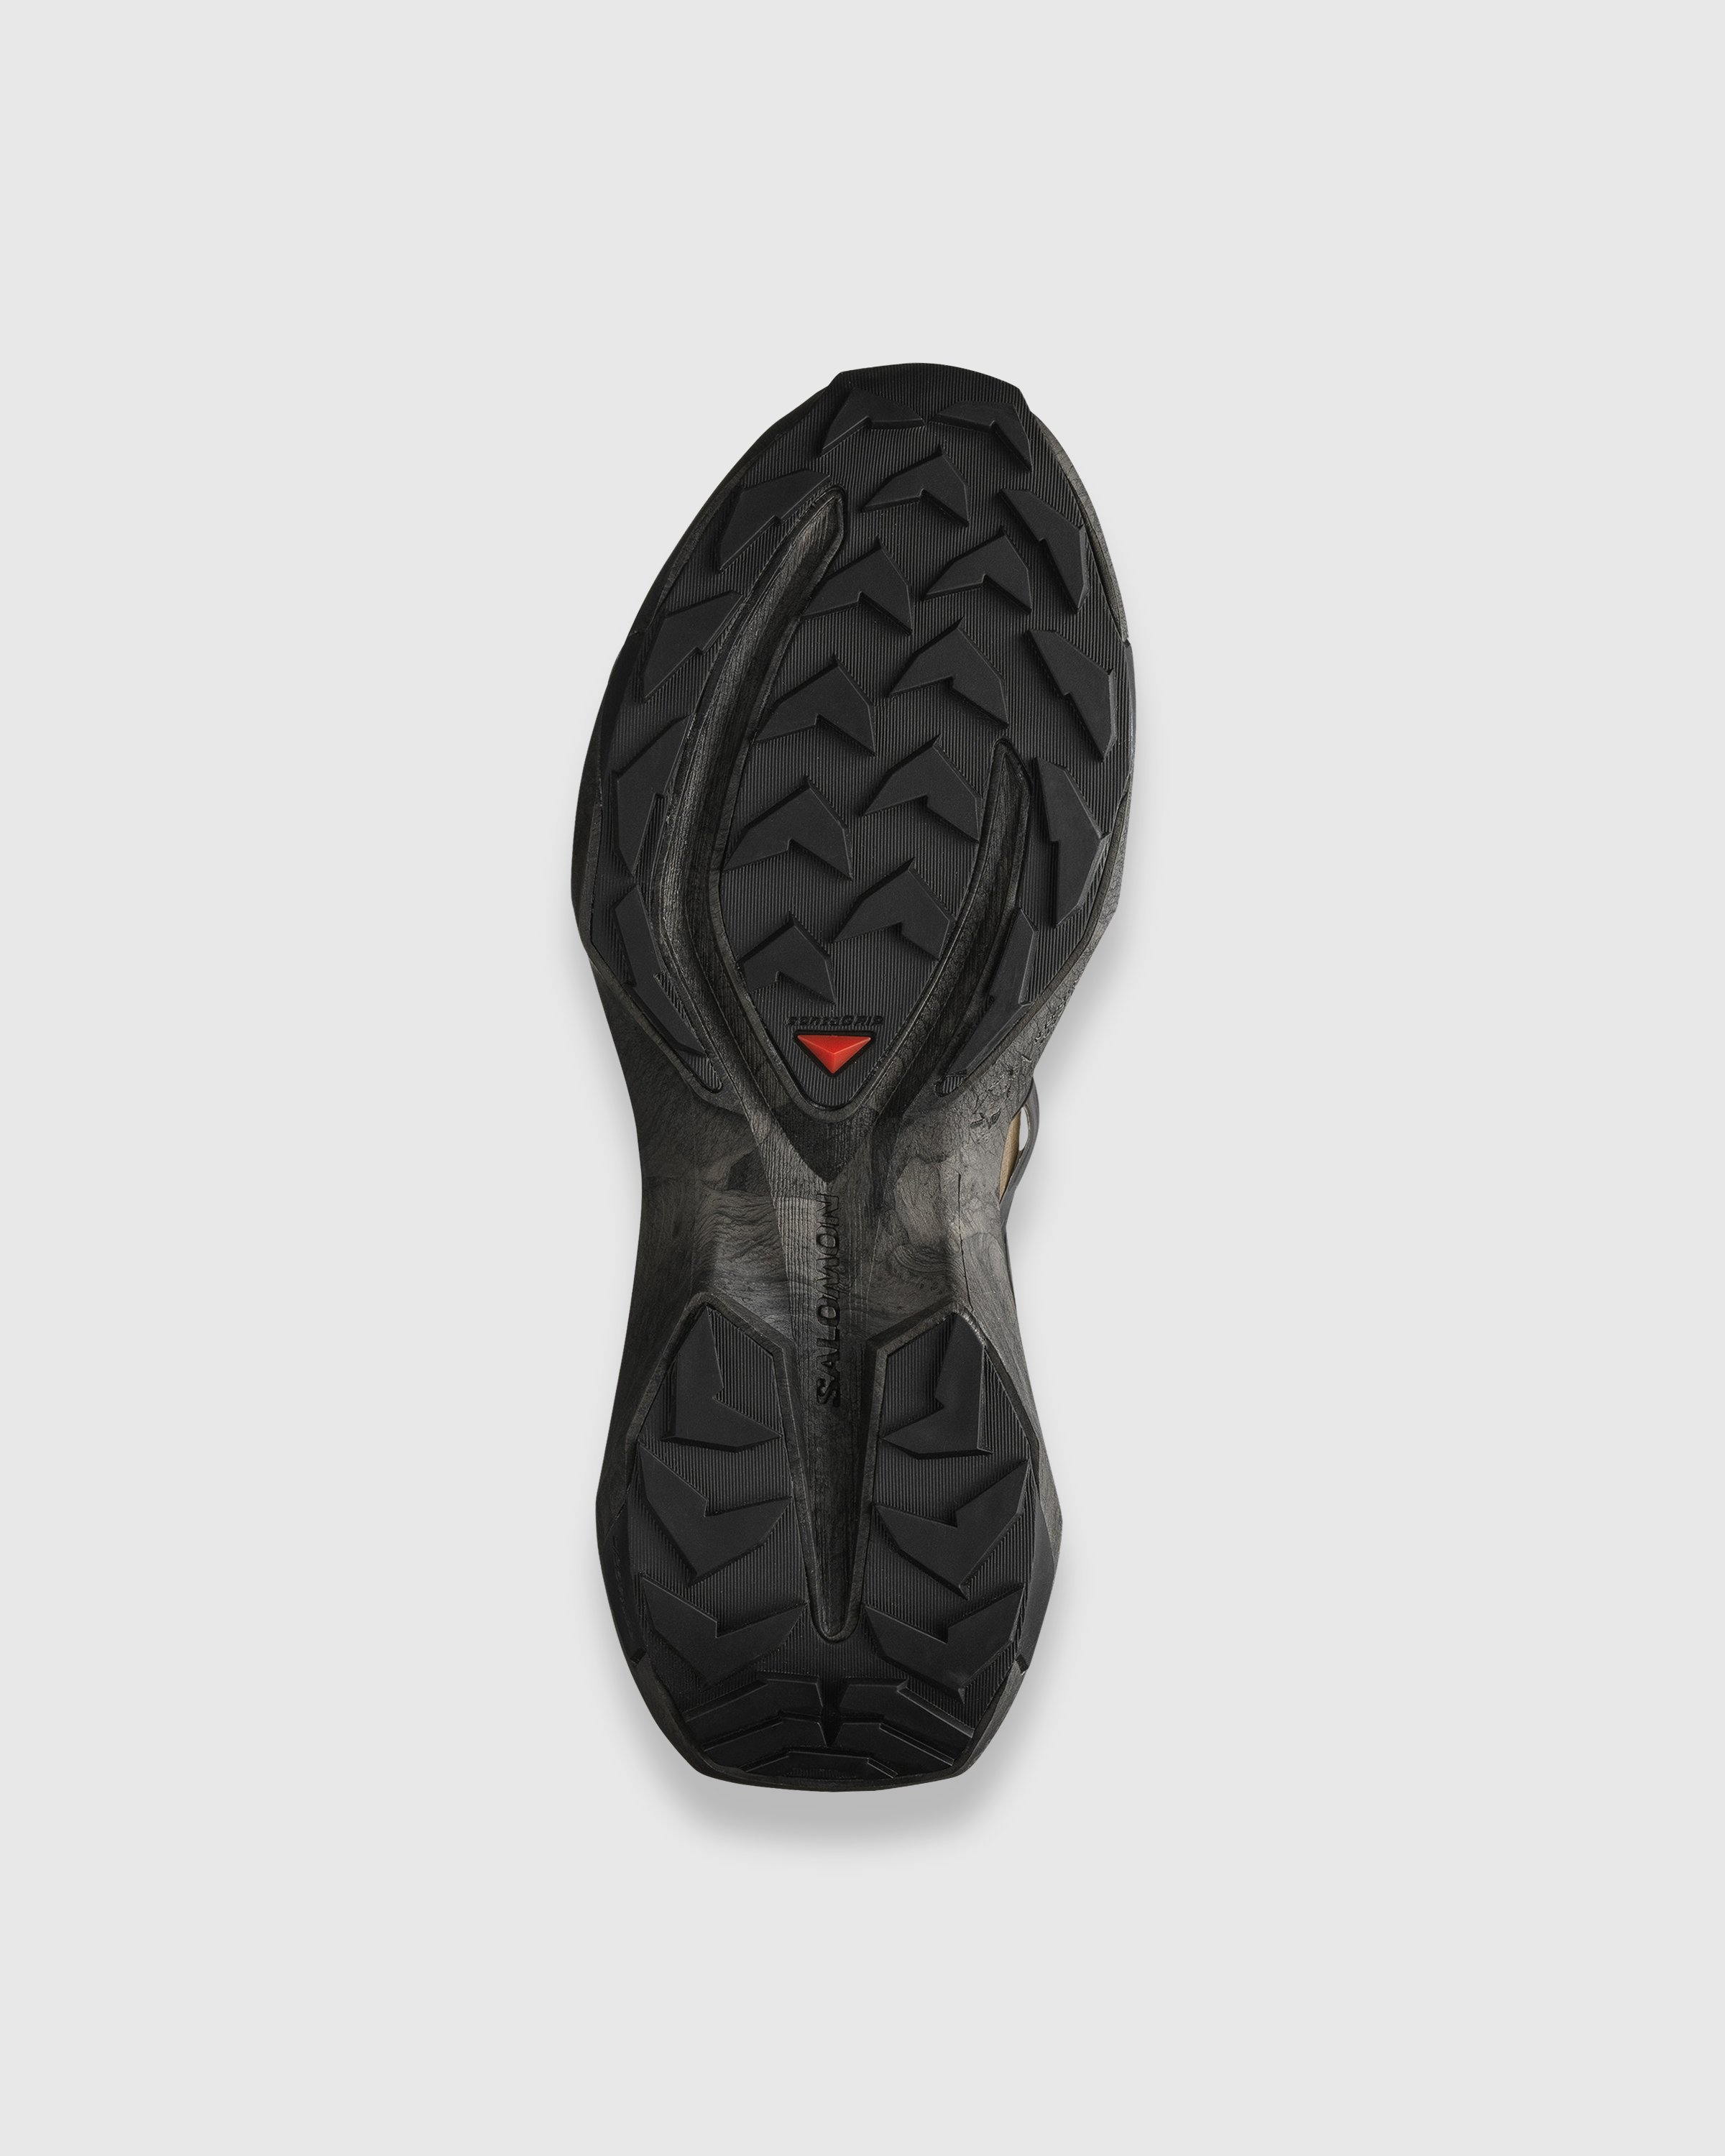 Salomon - XT PU.RE ADVANCED Whpep/Black/Flc - Footwear - Multi - Image 5